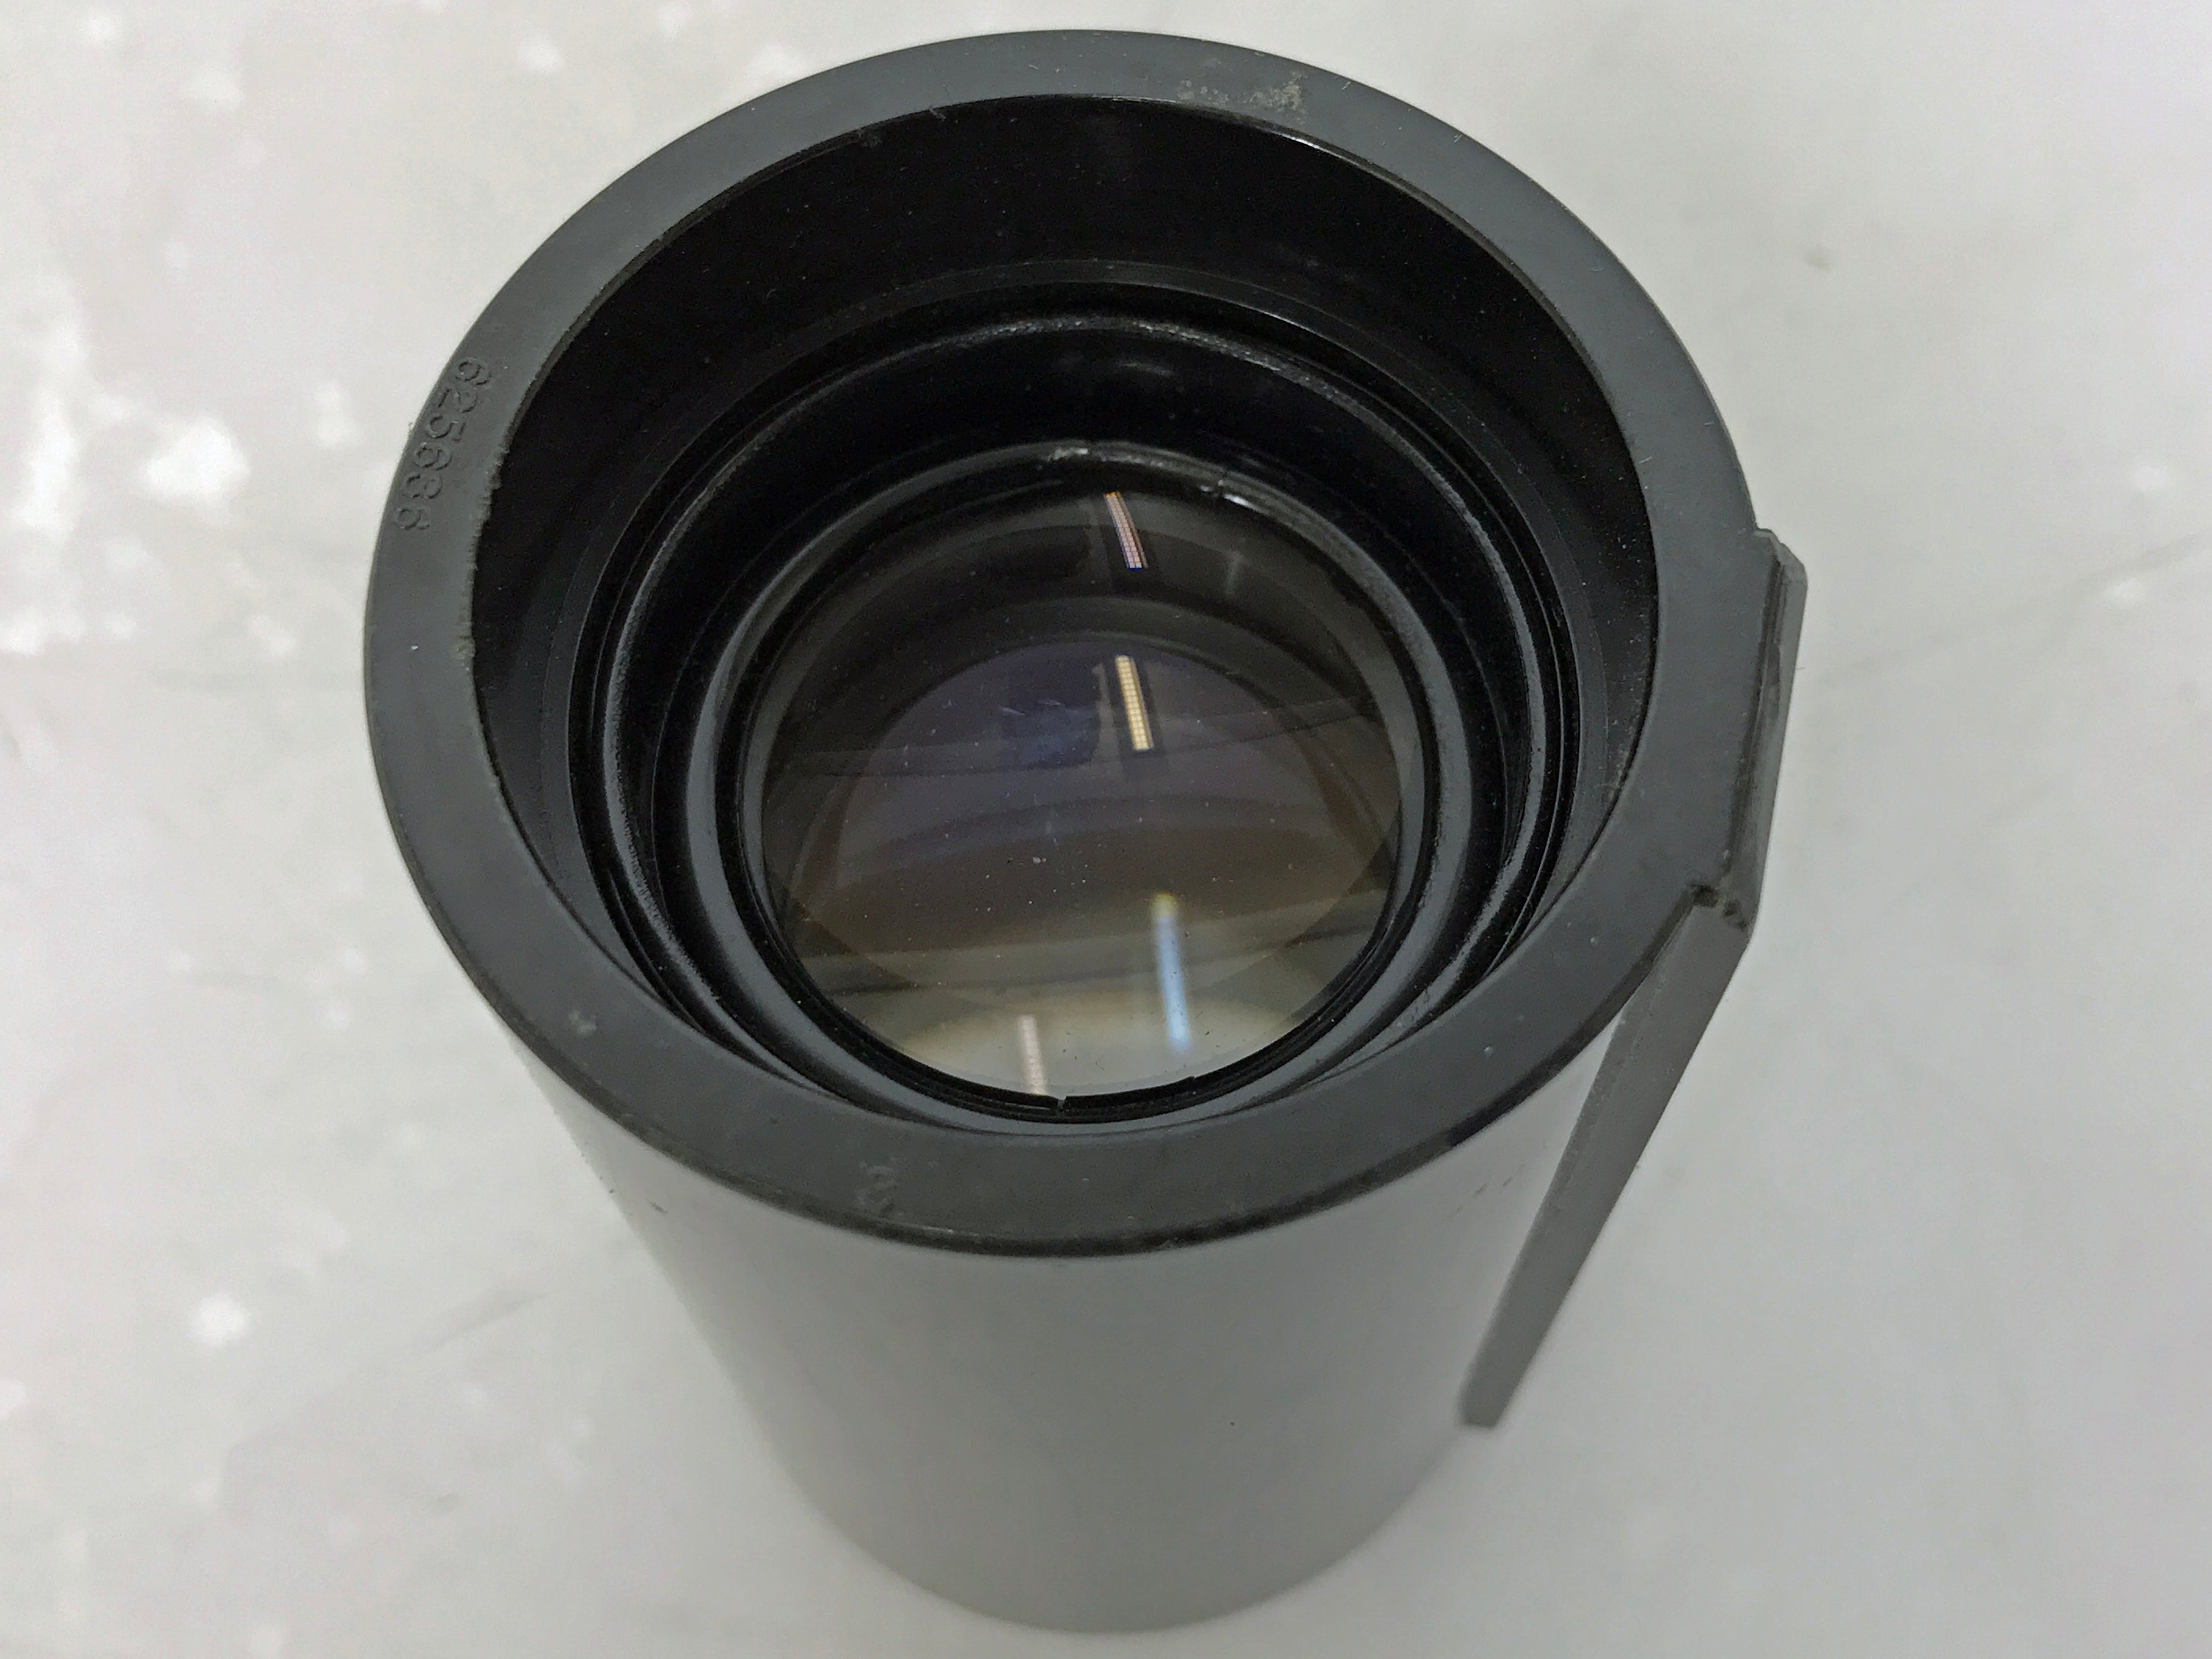 Kodak Projection Ektanar f/3.5 4" Projection Lens